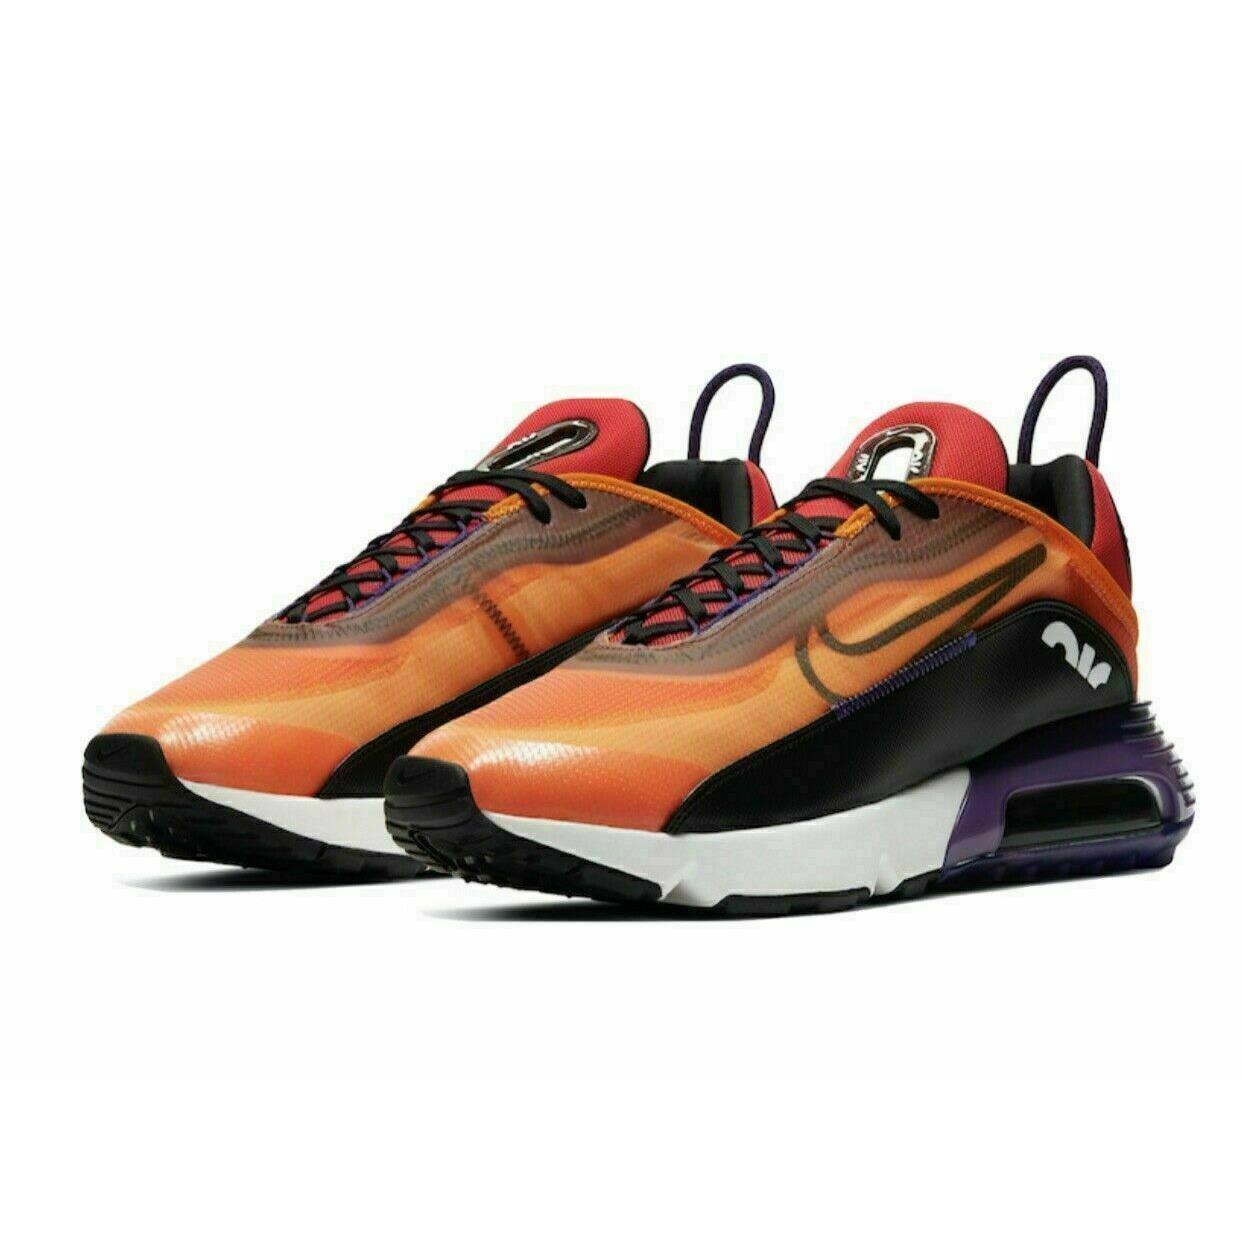 Nike Men`s Magma Orange/black-eggplant Air Max 2090 Running Sneaker Shoes